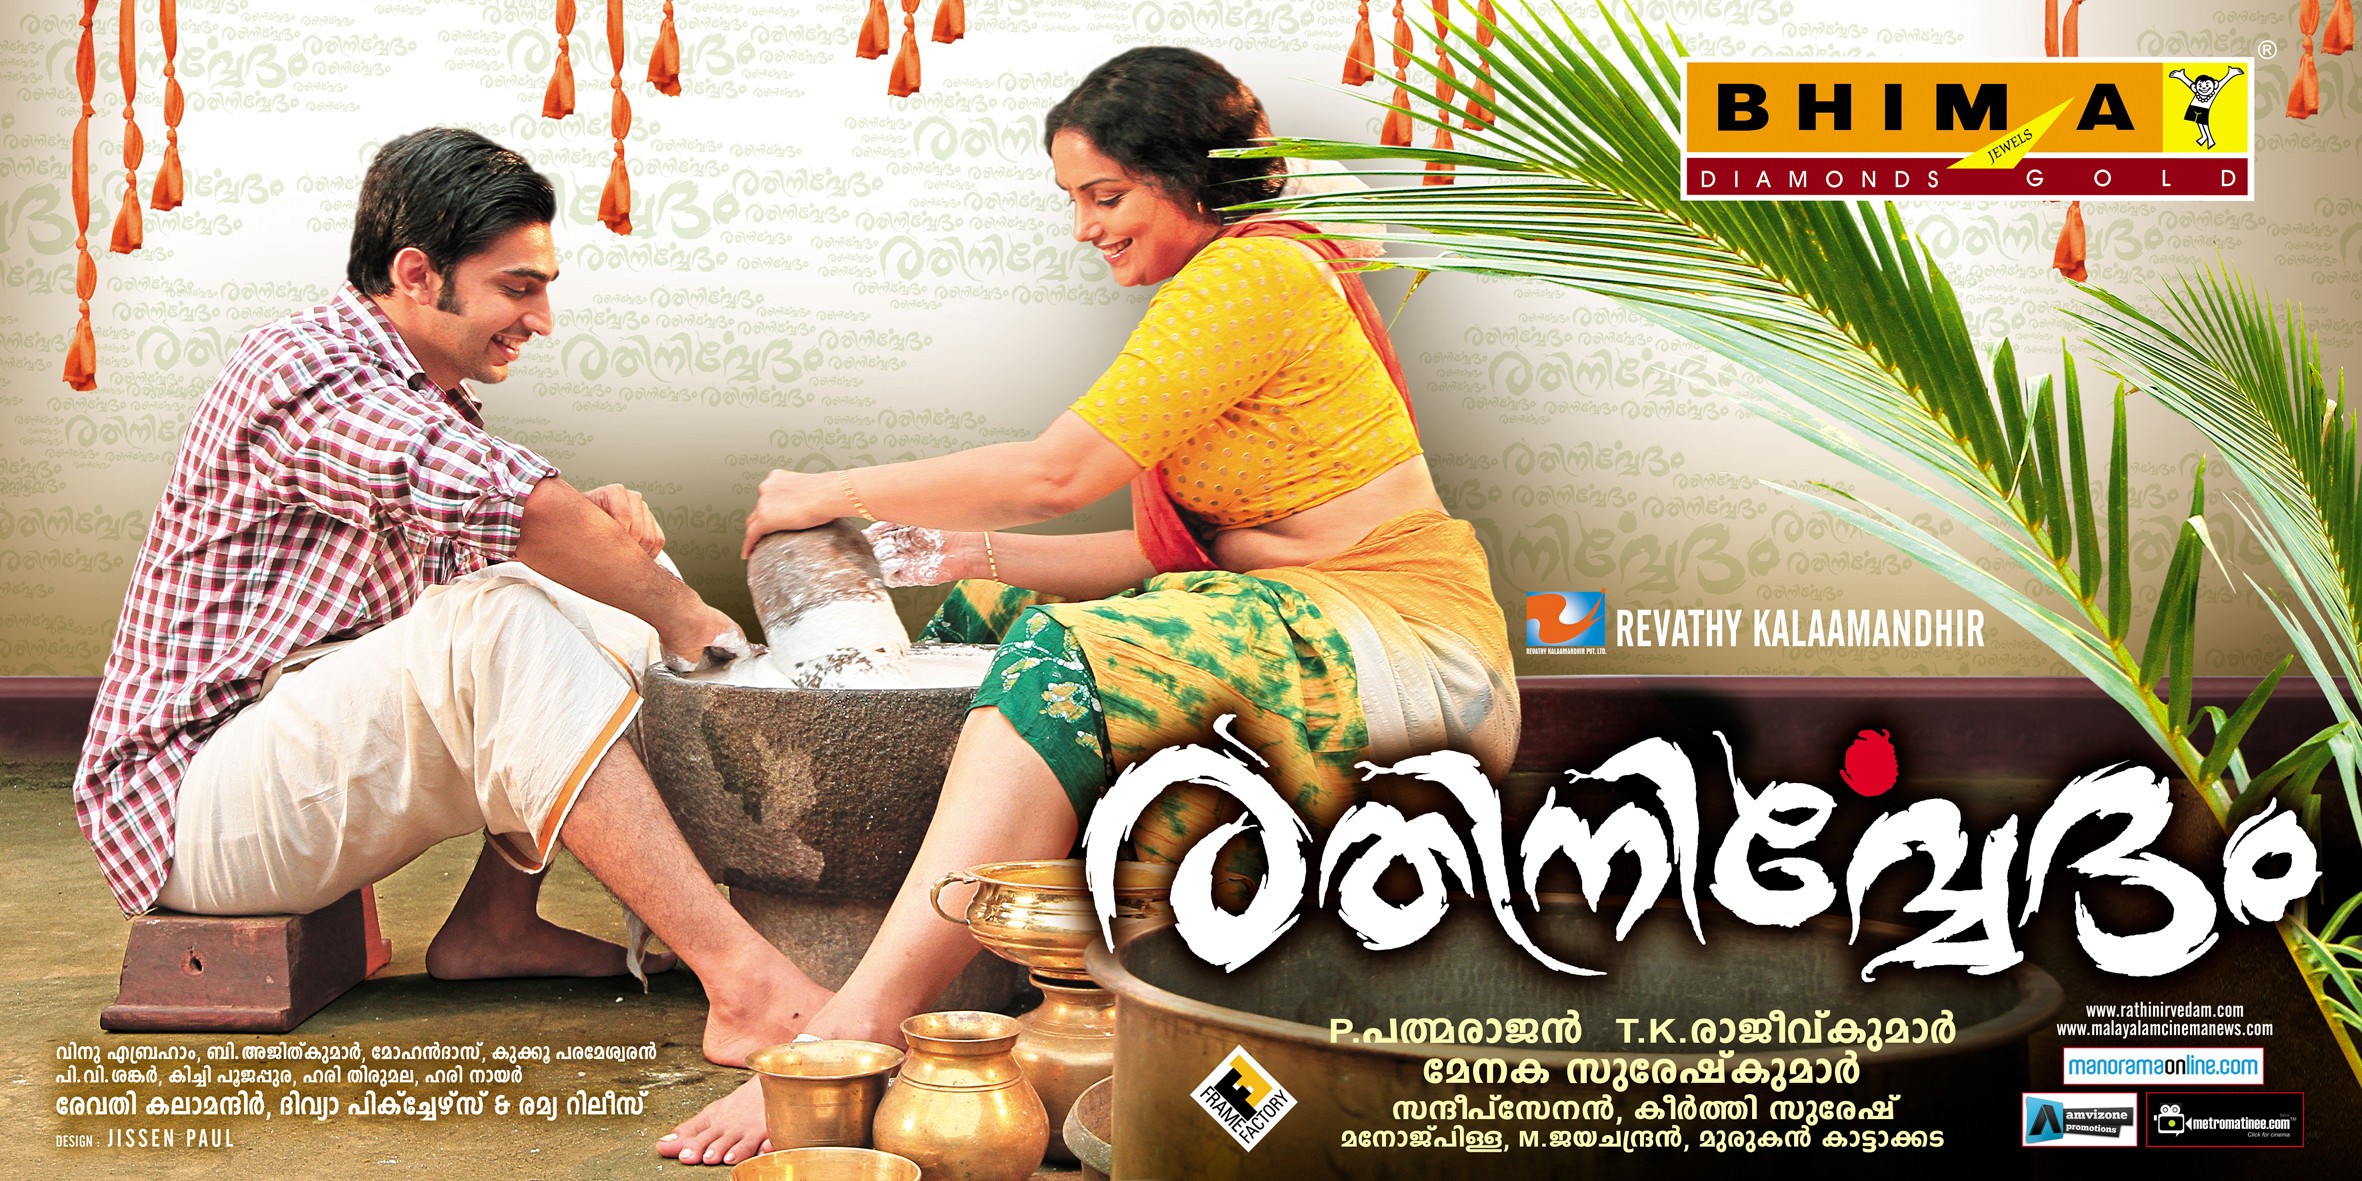 Mega Sized Movie Poster Image for Rathinirvedam (#3 of 5)